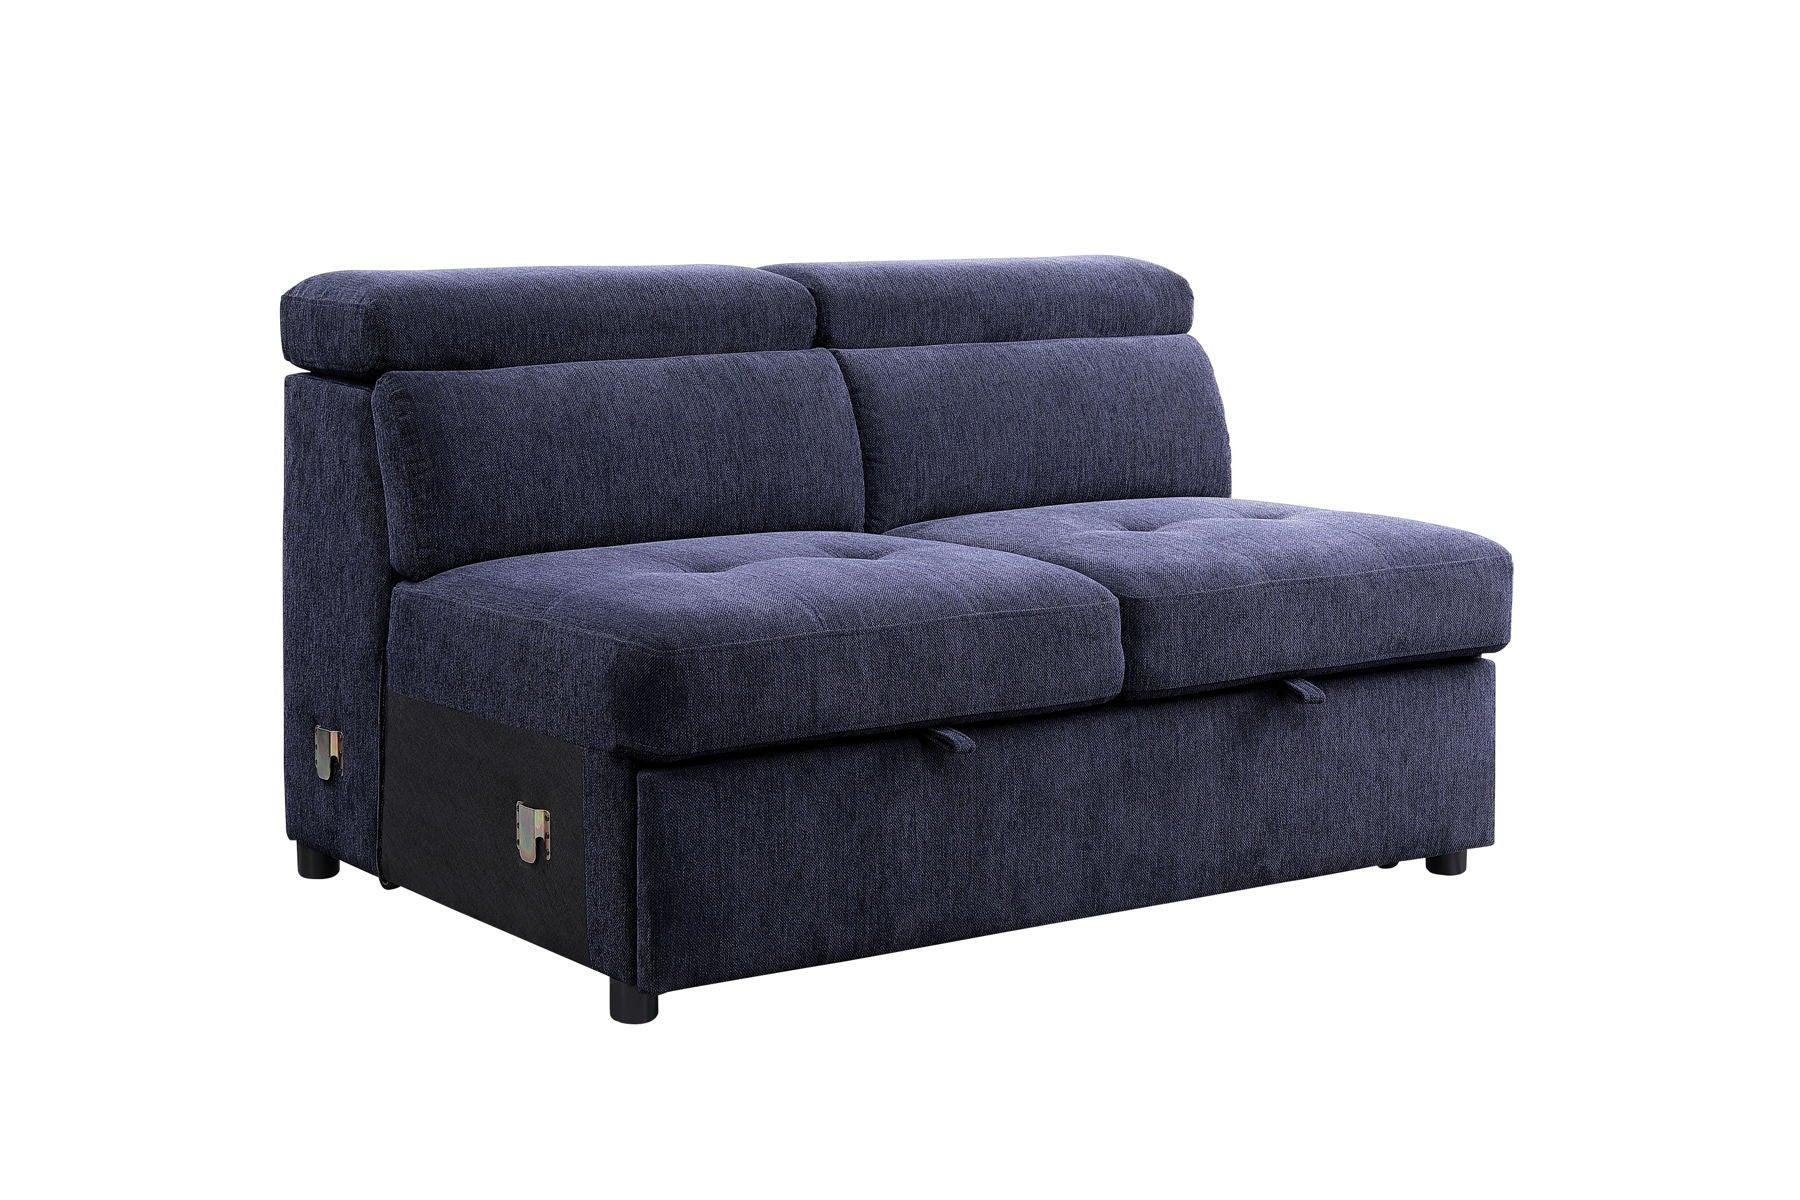 ACME - Nekoda - Sectional Sofa - Navy Blue Fabric - 5th Avenue Furniture